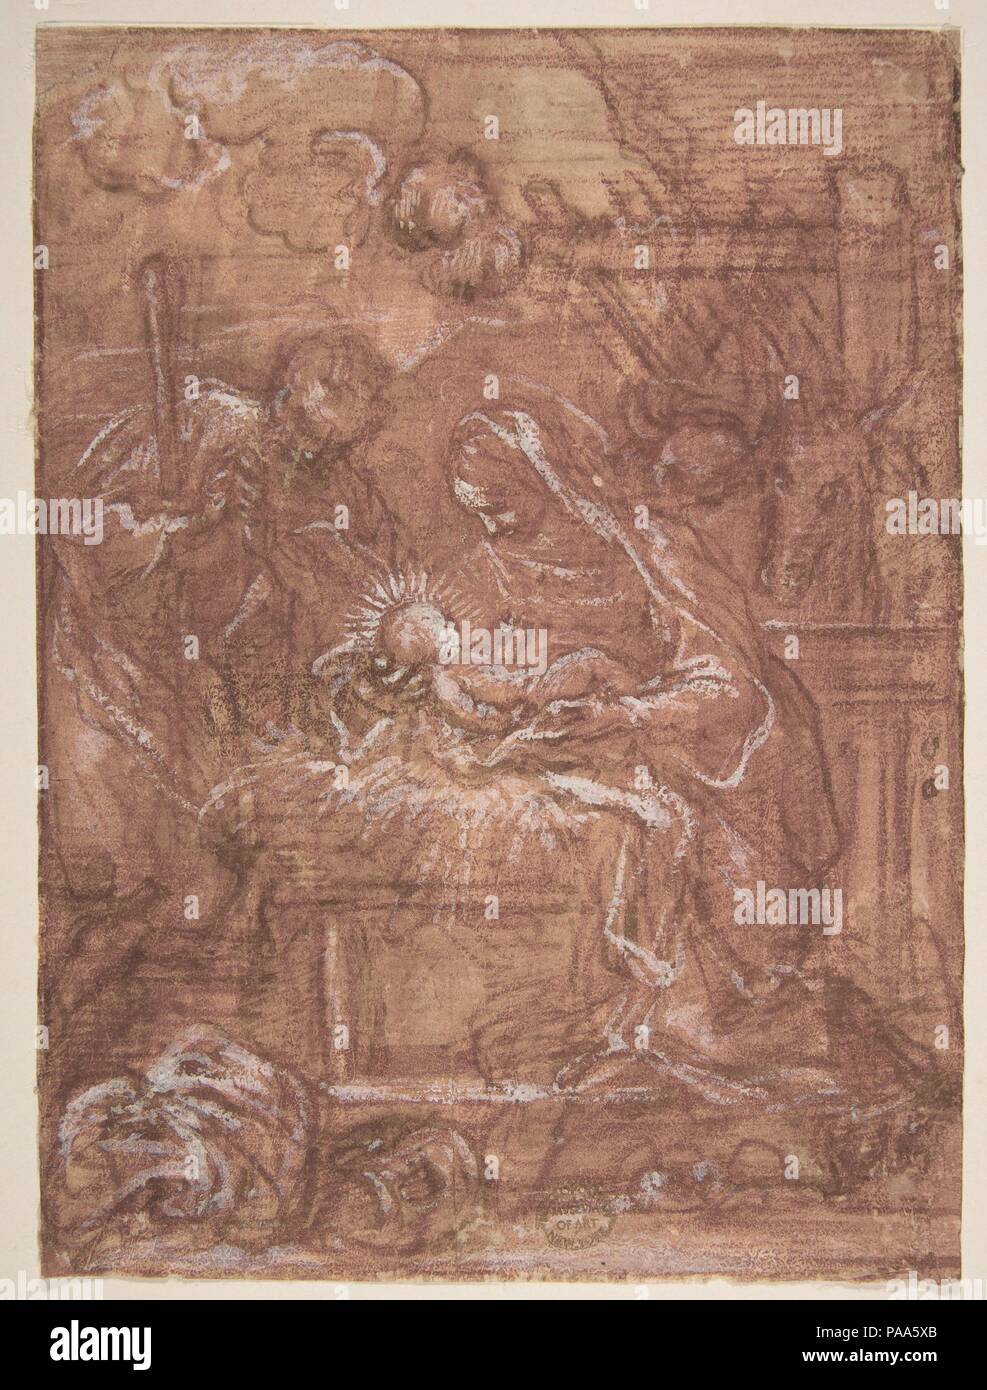 The Nativity. Artist: Giuseppe Passeri (Passari) (Italian, Rome 1654-1714 Rome). Dimensions: 7 7/16 × 5 1/2 in. (18.9 × 14 cm). Date: 1654-1714. Museum: Metropolitan Museum of Art, New York, USA. Stock Photo